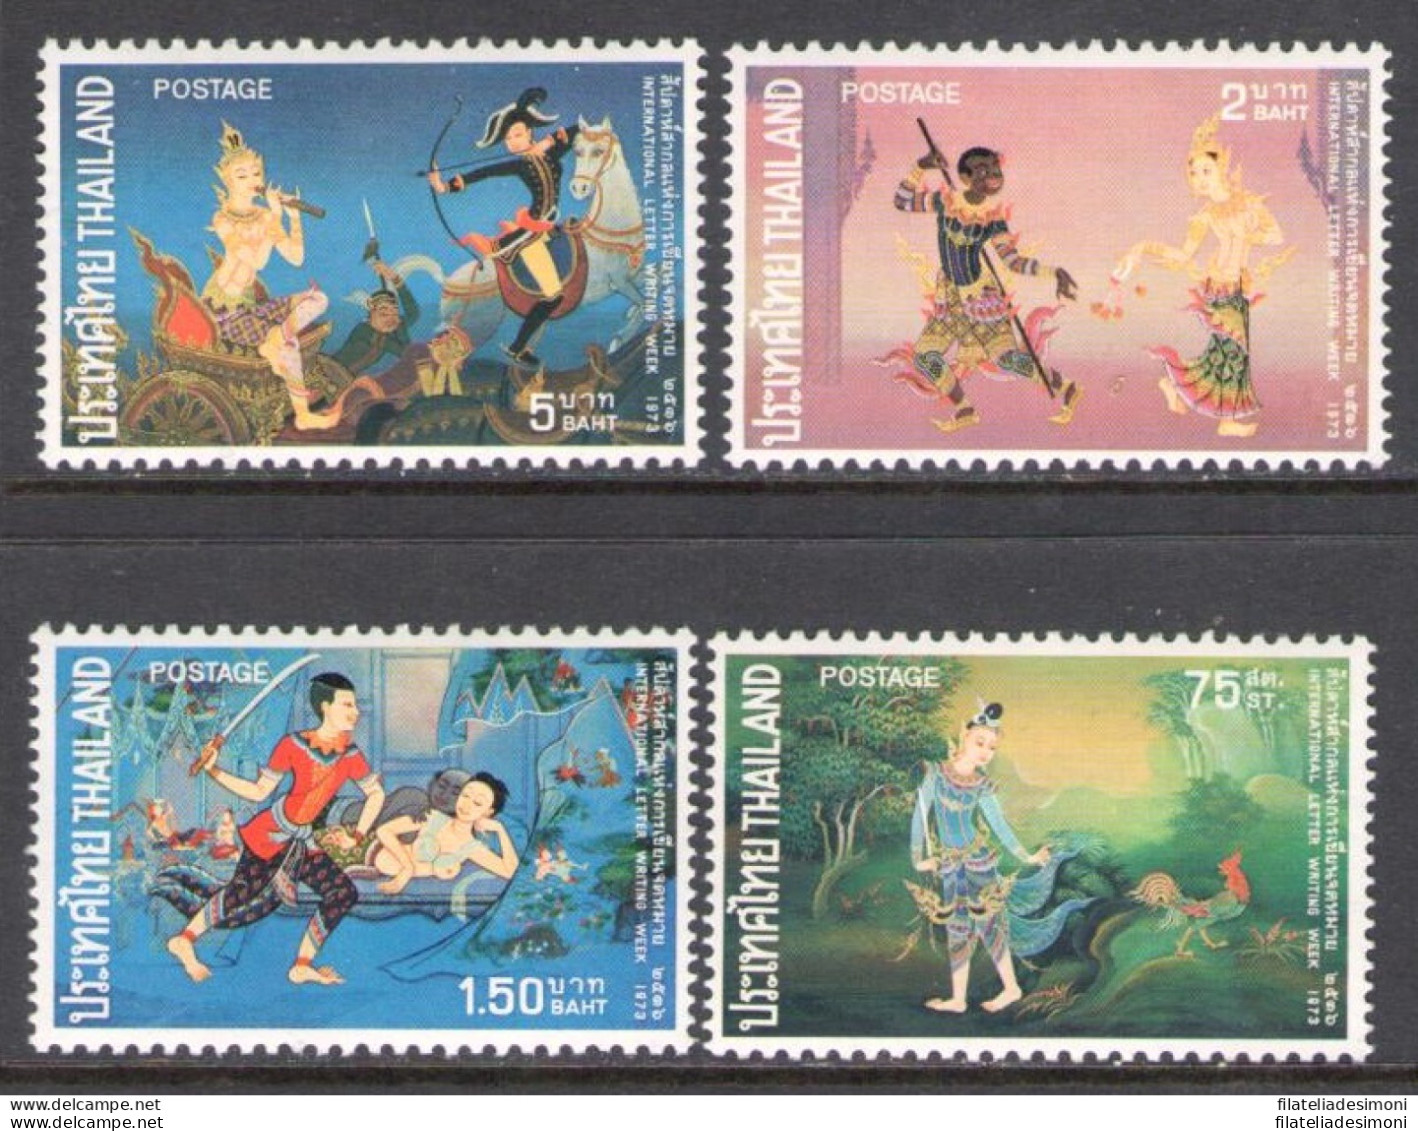 1973 Thailand ,Tailandia - SG 776-779 - Settimana Corrispondenza-International Correspondence Week 4 Valori MNH** - Thailand